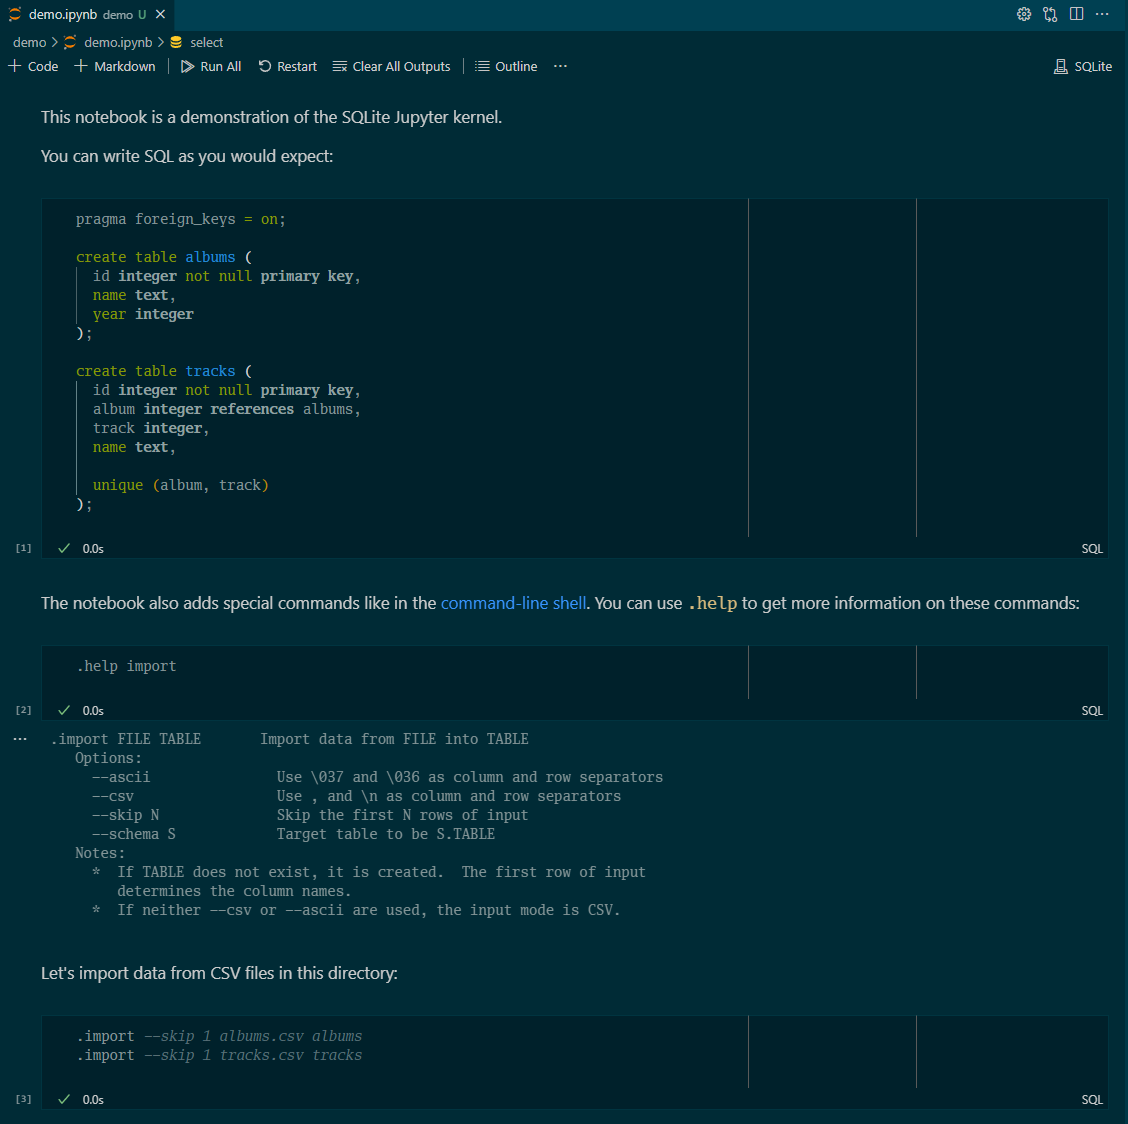 A screenshot of the demo notebook in Visual Studio Code